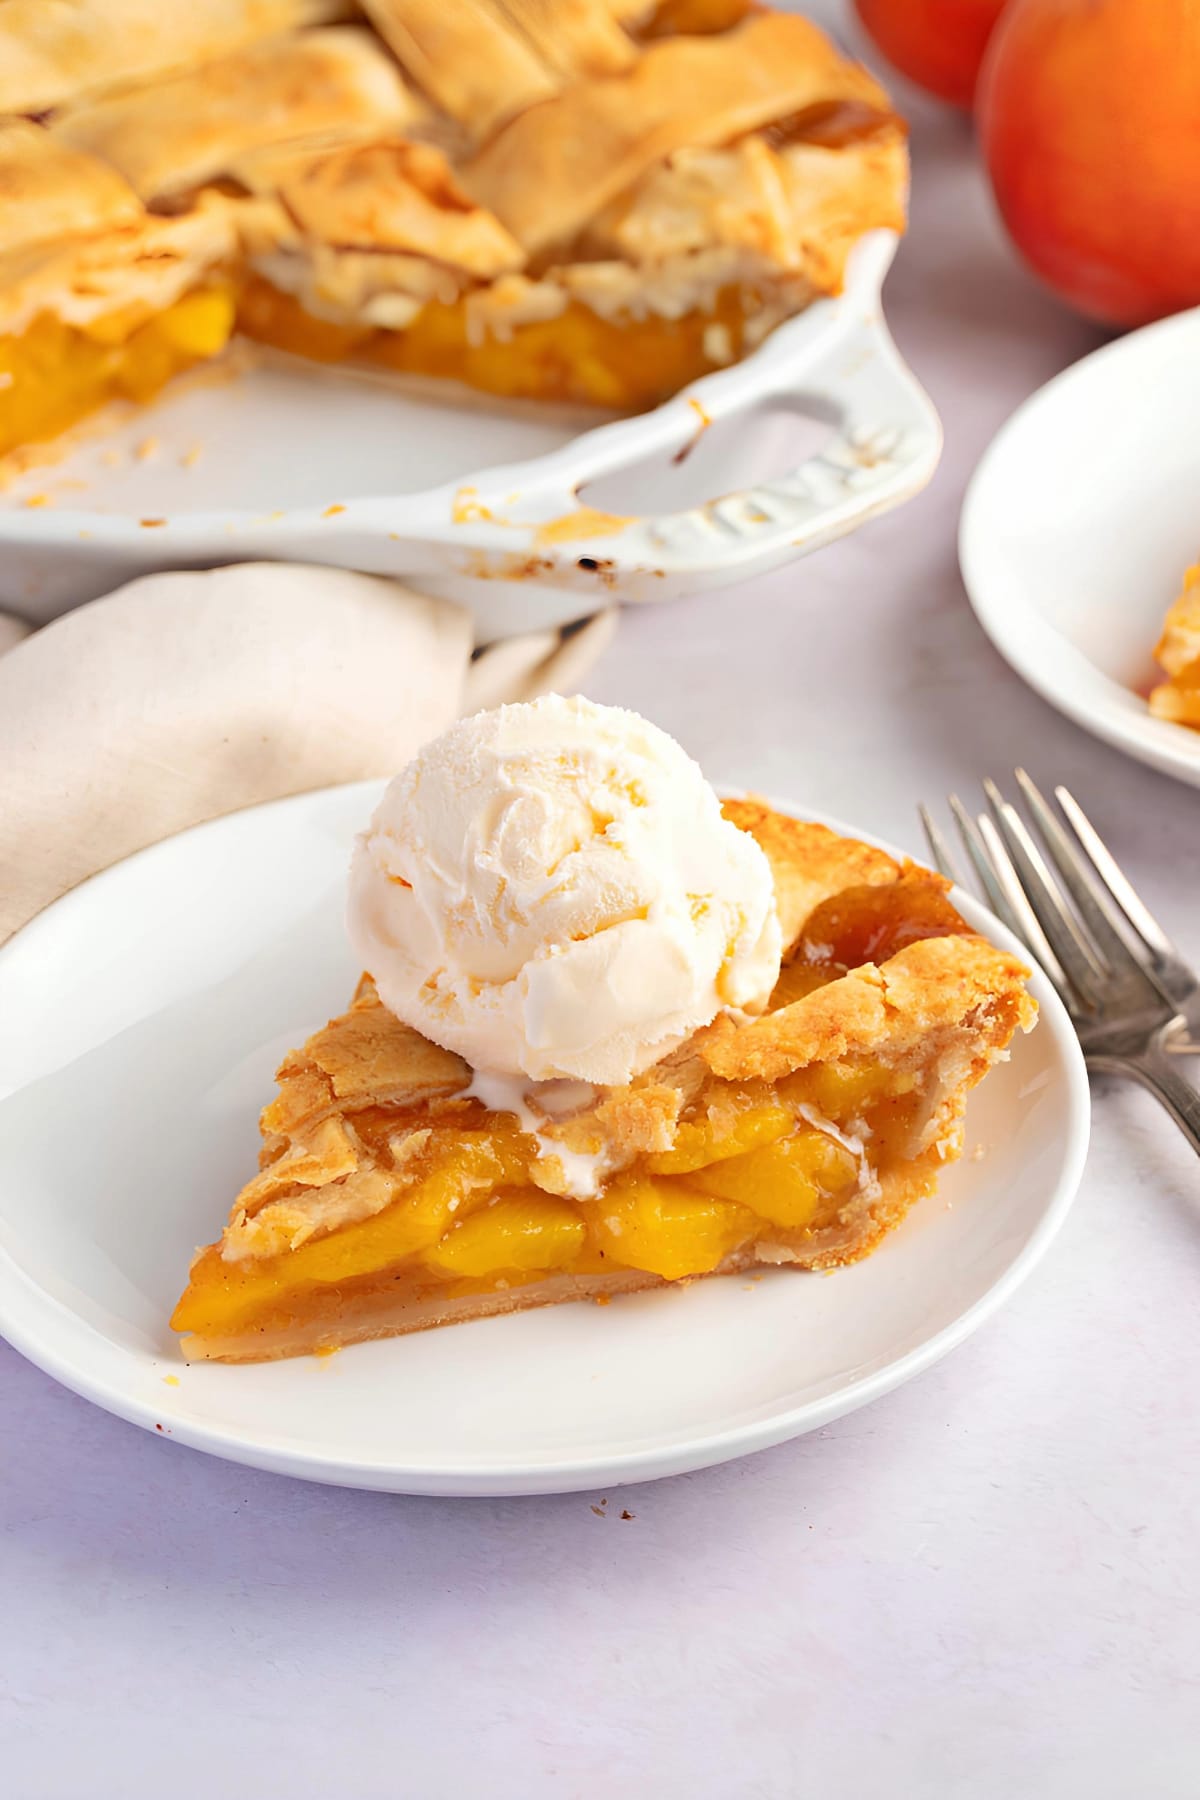 Sliced Homemade Peach Pie with Vanilla Ice Cream on Top